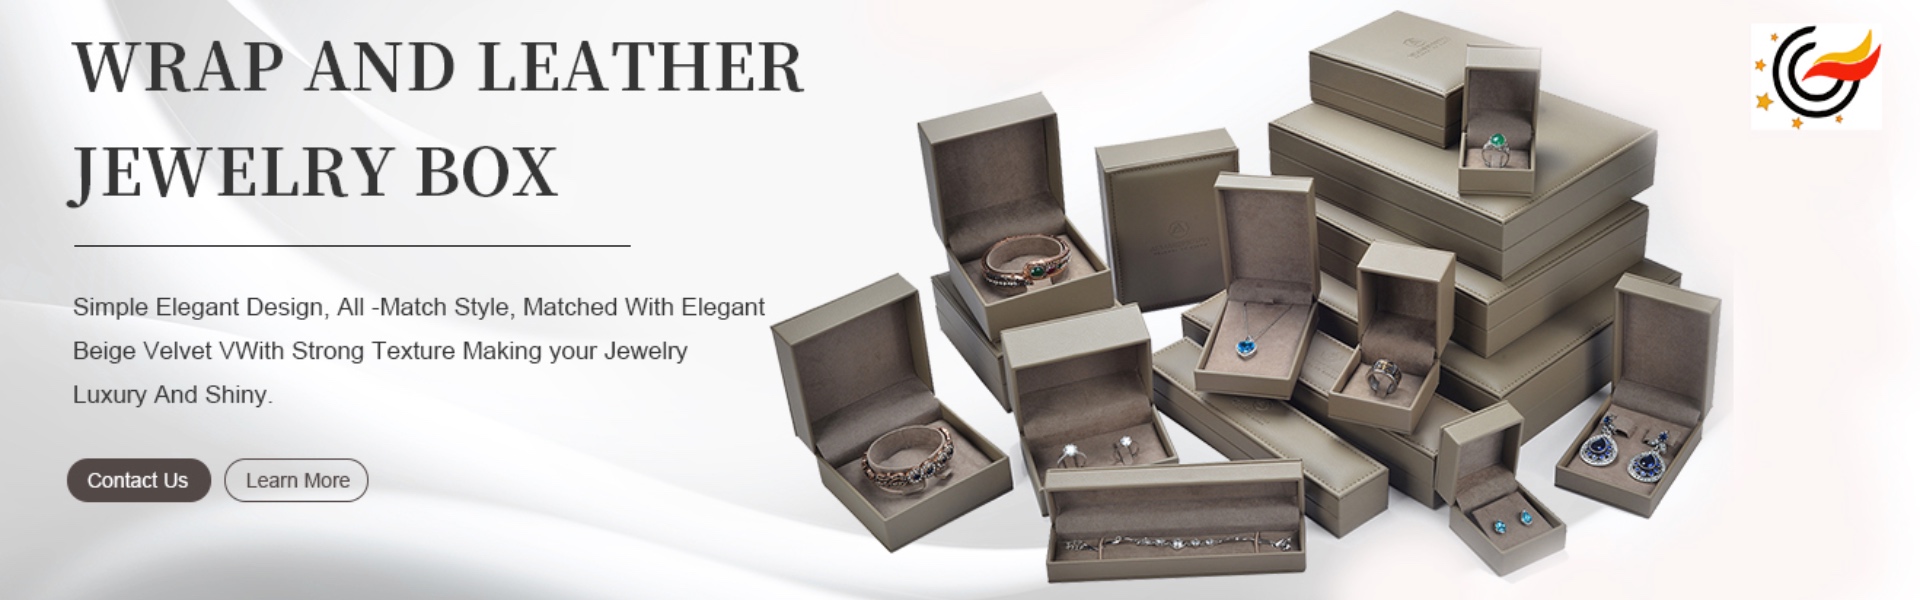 paper box,jewelry,jewelry box,Gorrin corporation limited